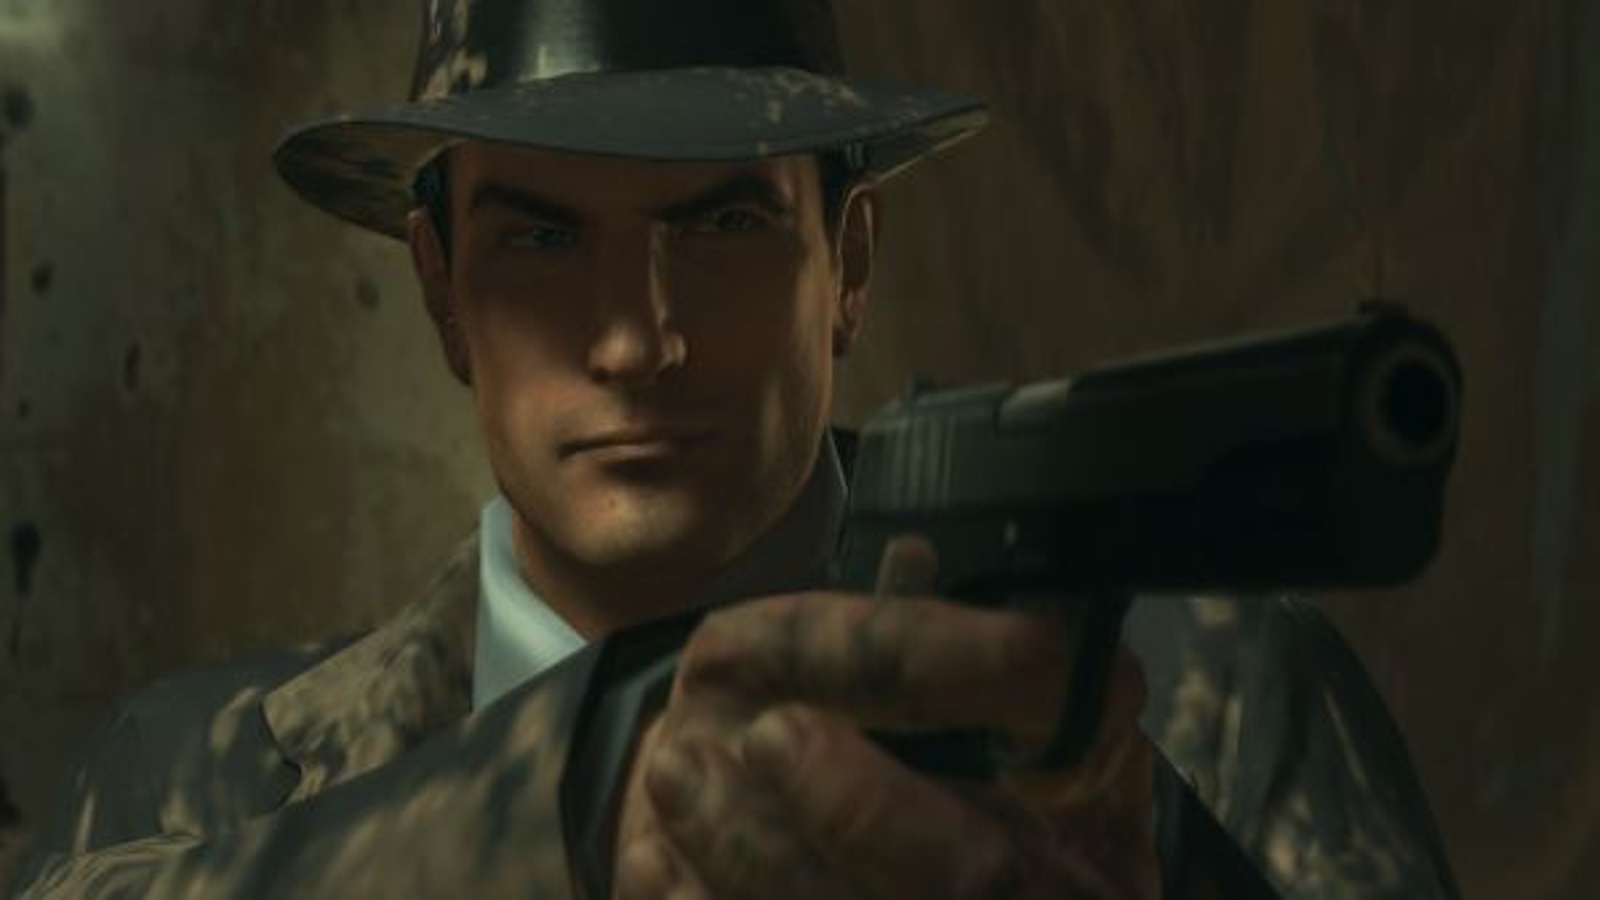 BioShock Developer Hiring Based on Metacritic Scores - The Escapist